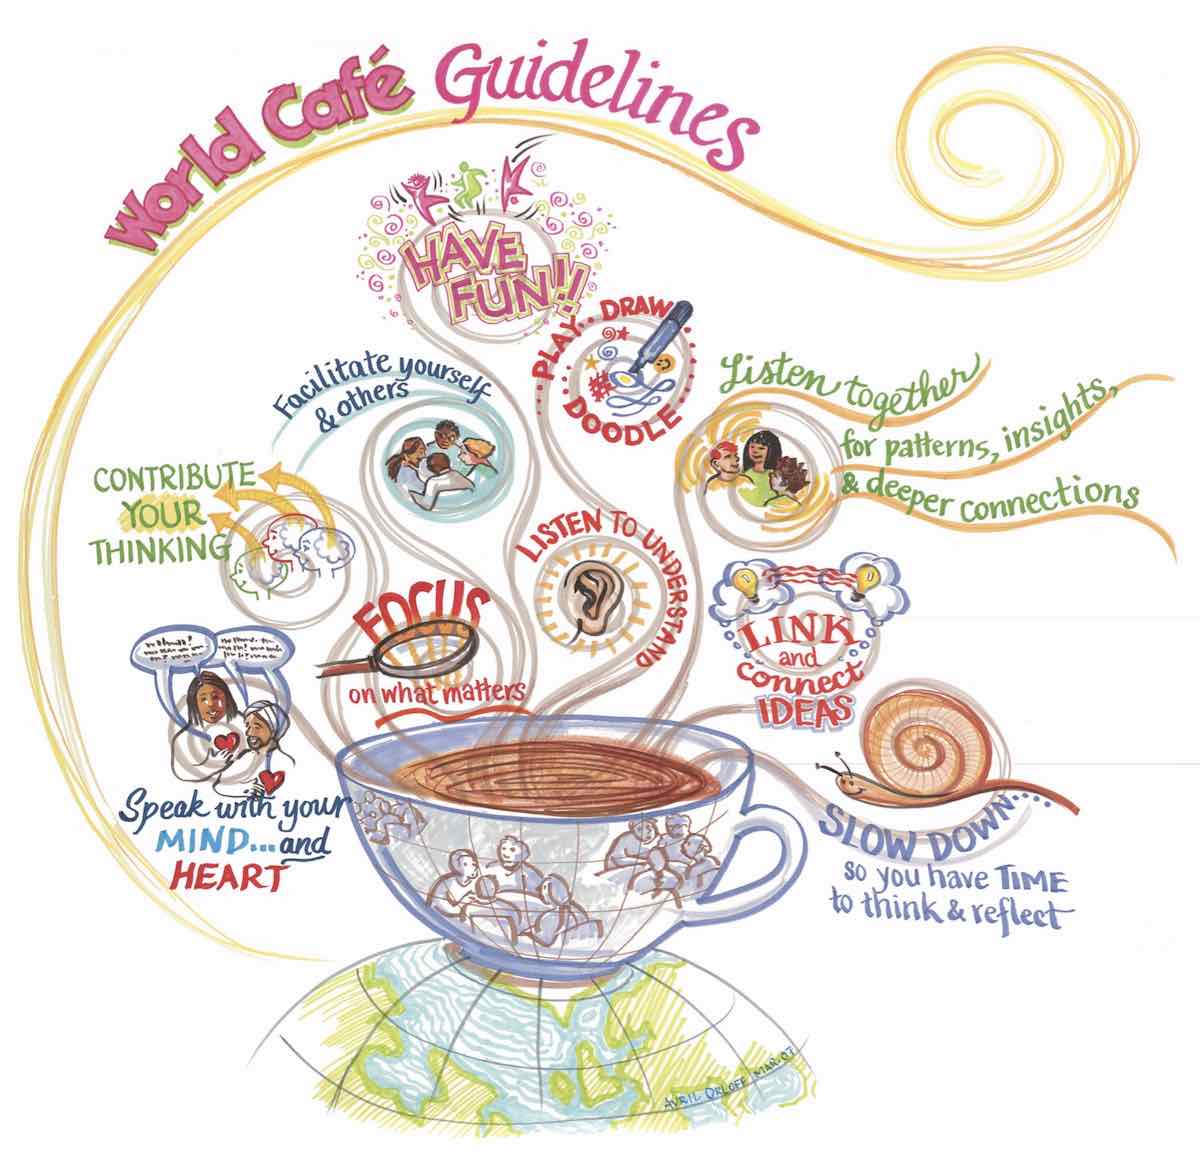 World Cafe Guidelines